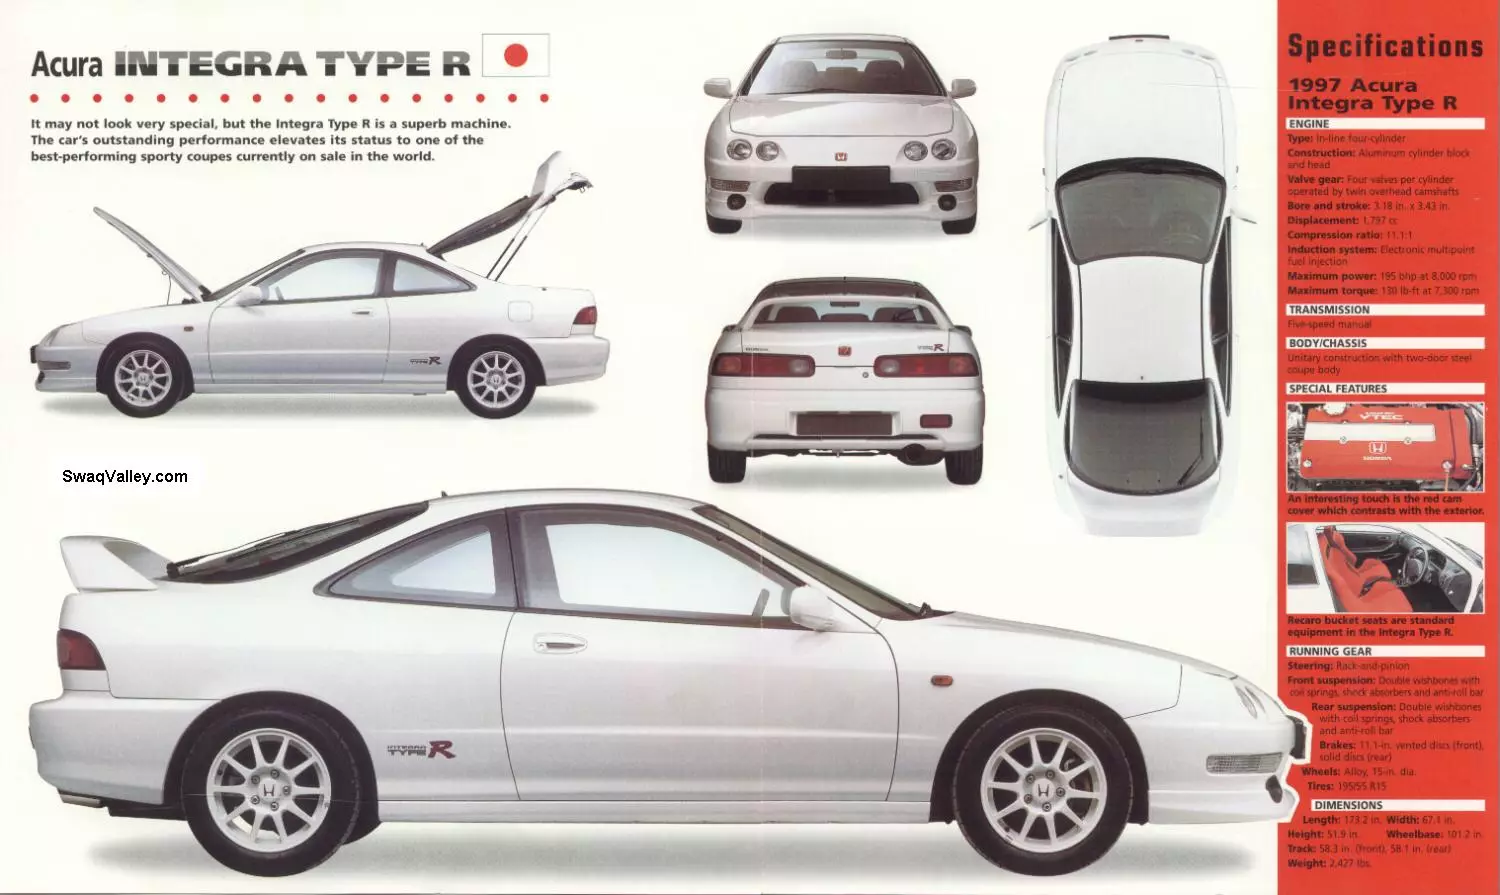 “Acura Integra Type R”, 1997